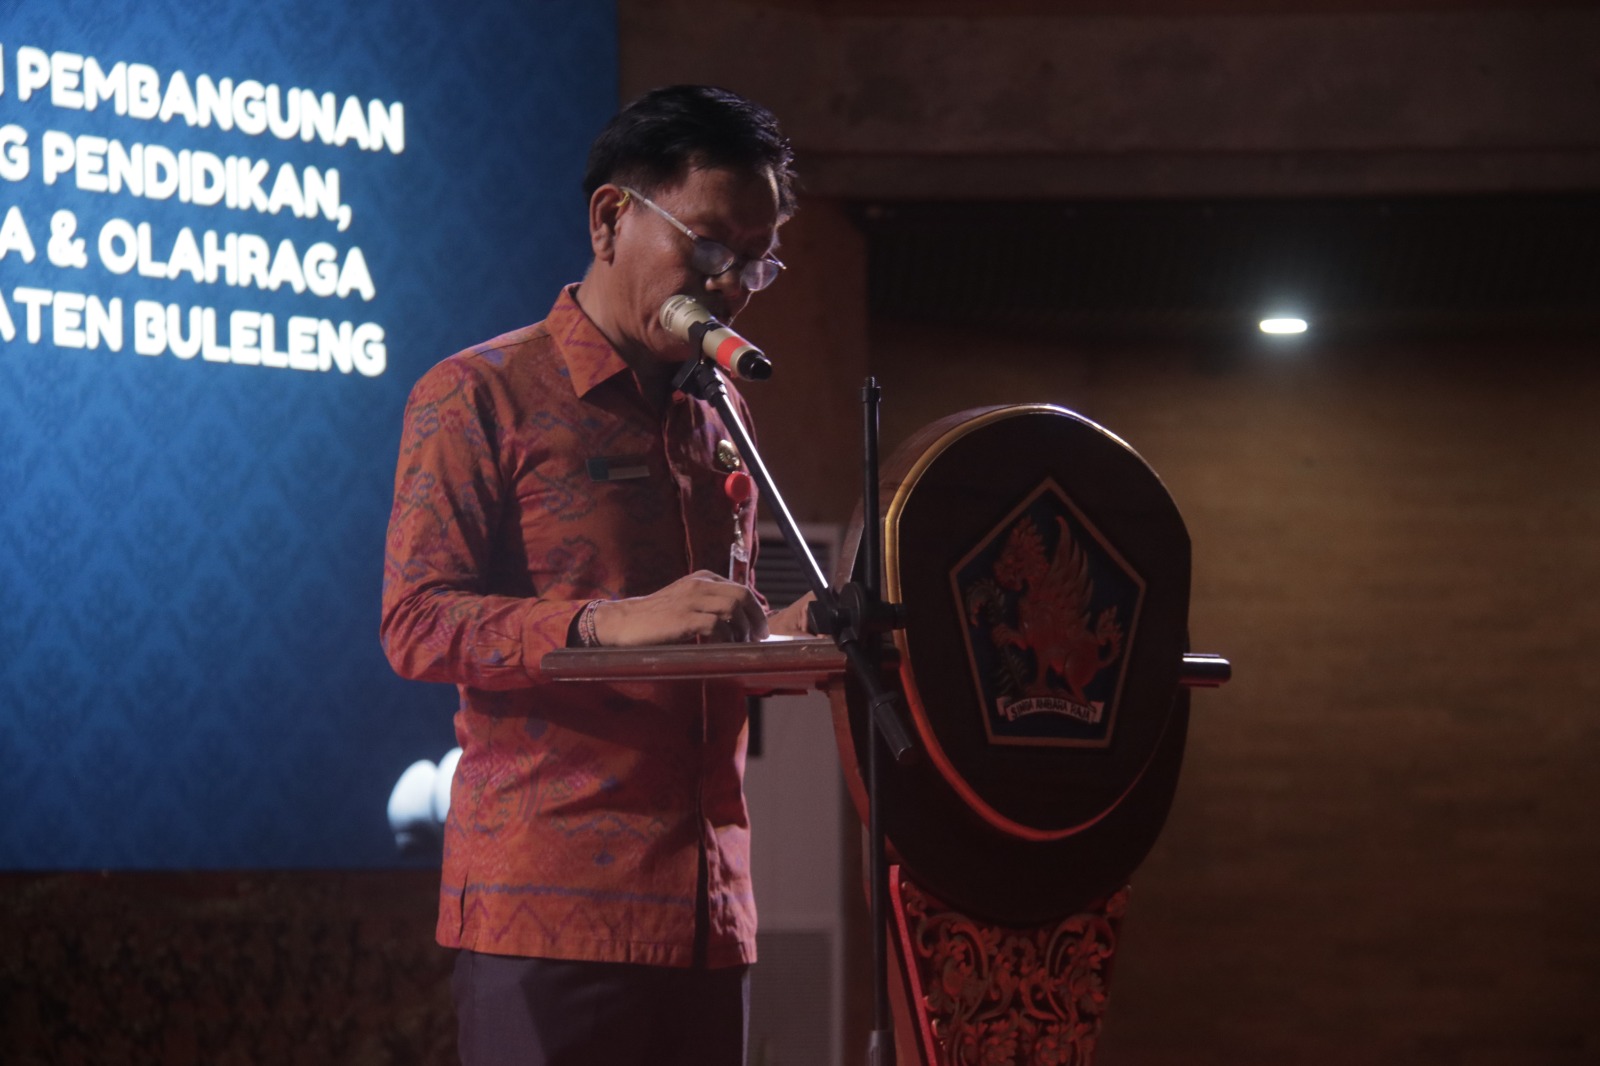 Kadis Made Astika Komitmen Bangun Pendidikan, Olahraga dan Kepemudaan Secara Merata di Buleleng